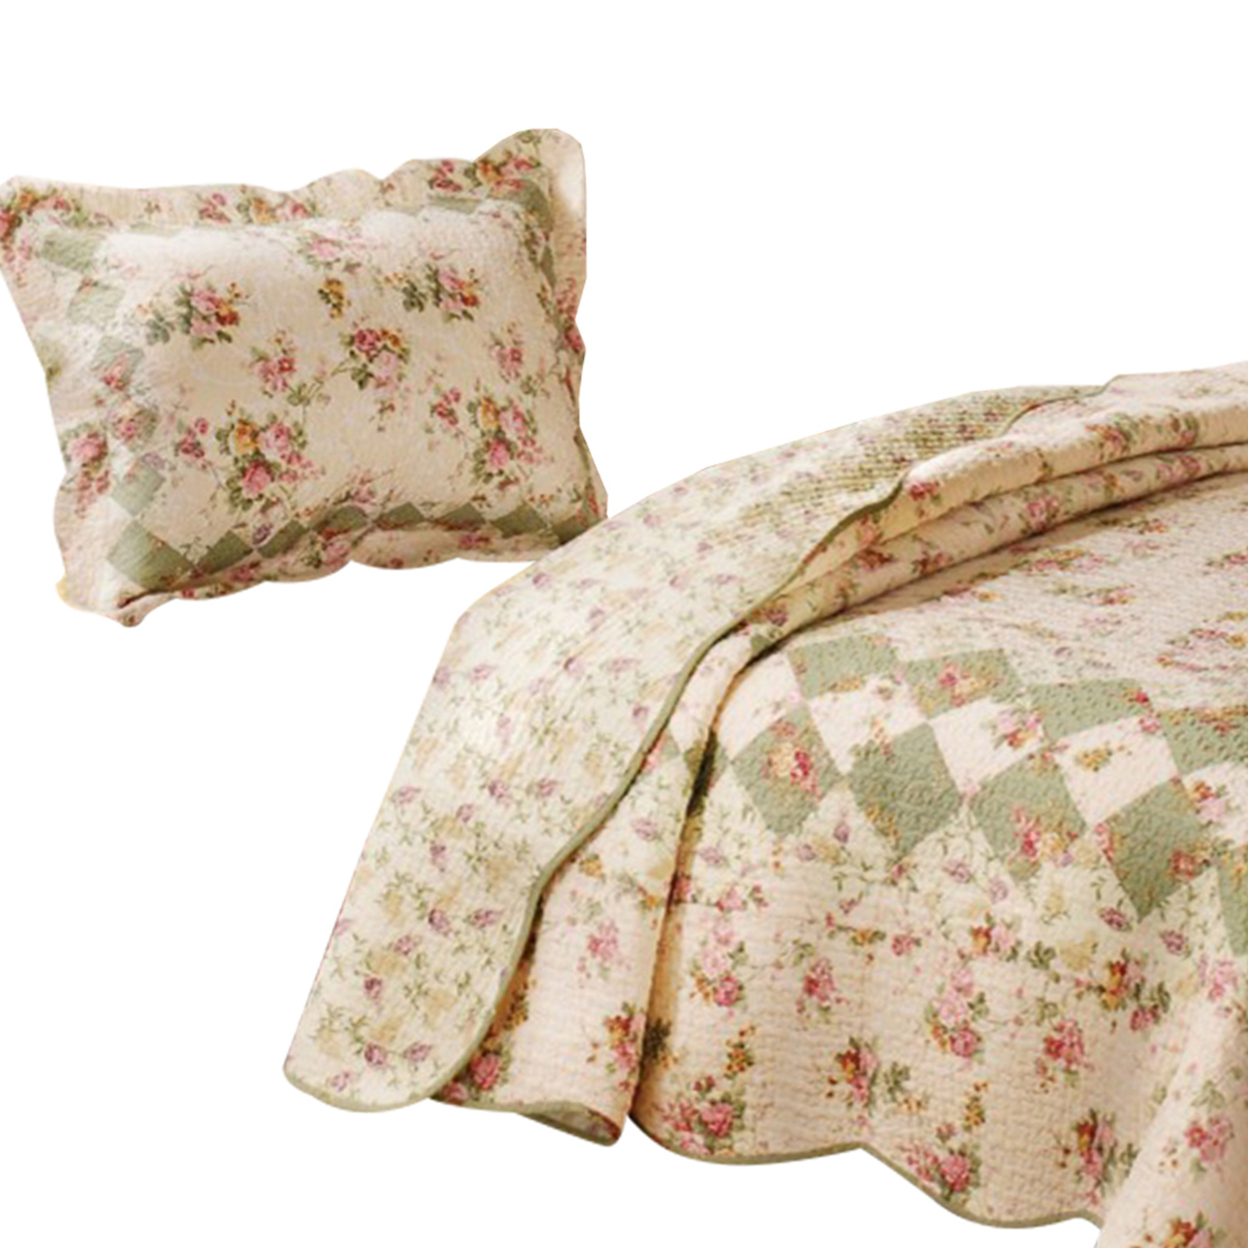 Denali 2 Piece Fabric Twin Size Quilt Set With Floral Prints, Multicolor- Saltoro Sherpi